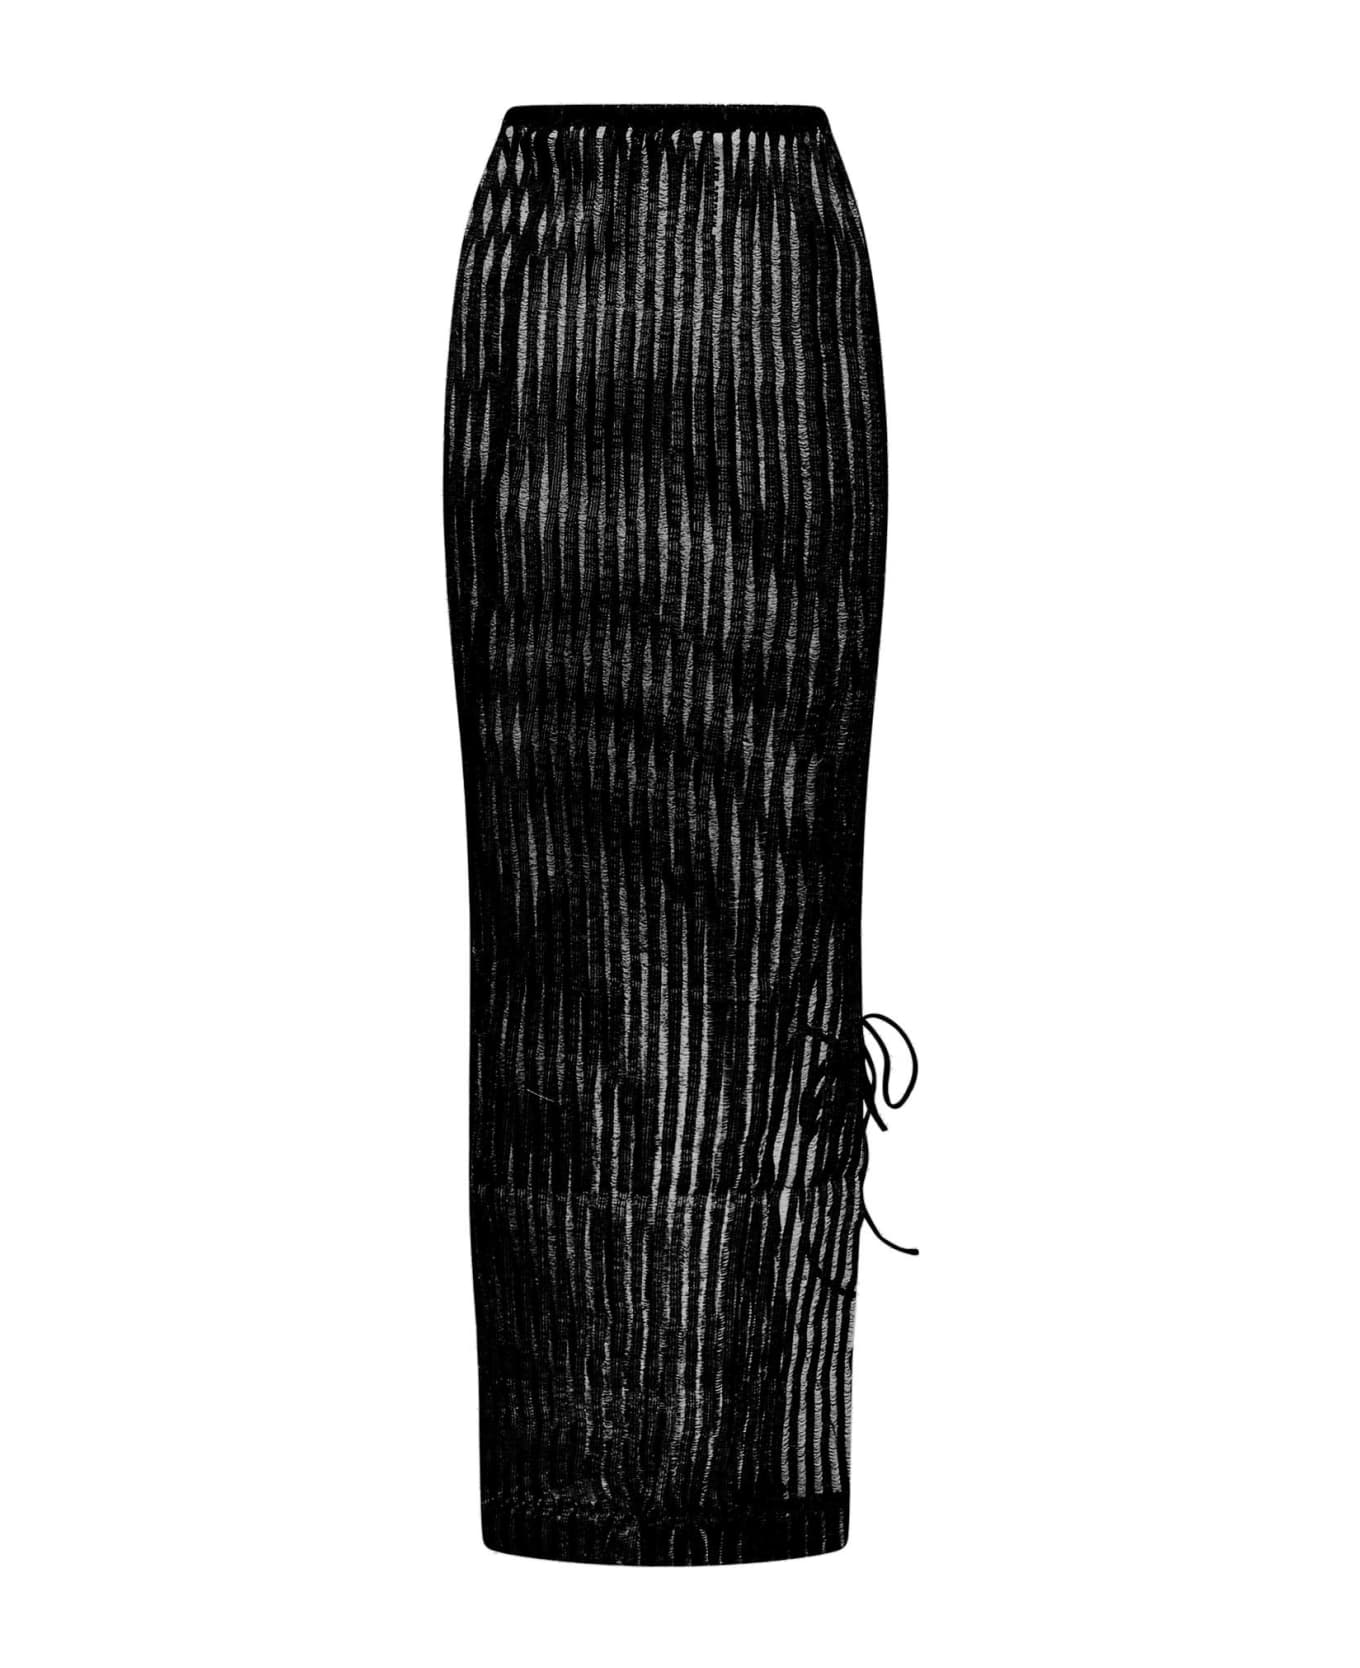 A. Roege Hove Patricia Long Skirt - BLACK (Black)